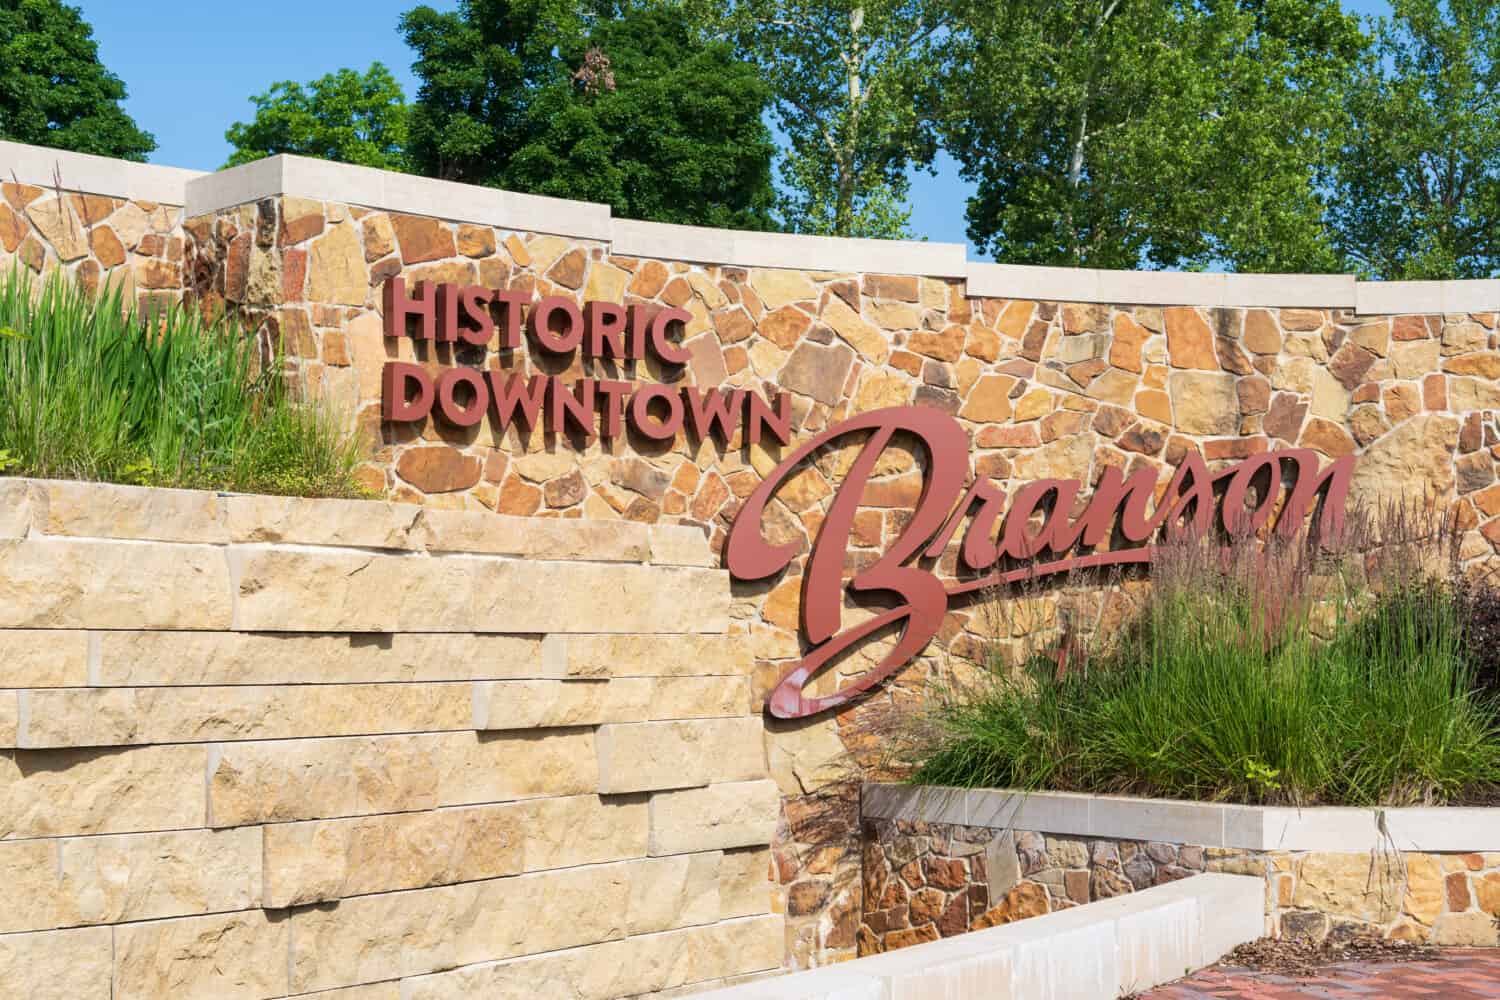 Historic Downtown Branson sign at Liberty Plaza in Branson, Missouri